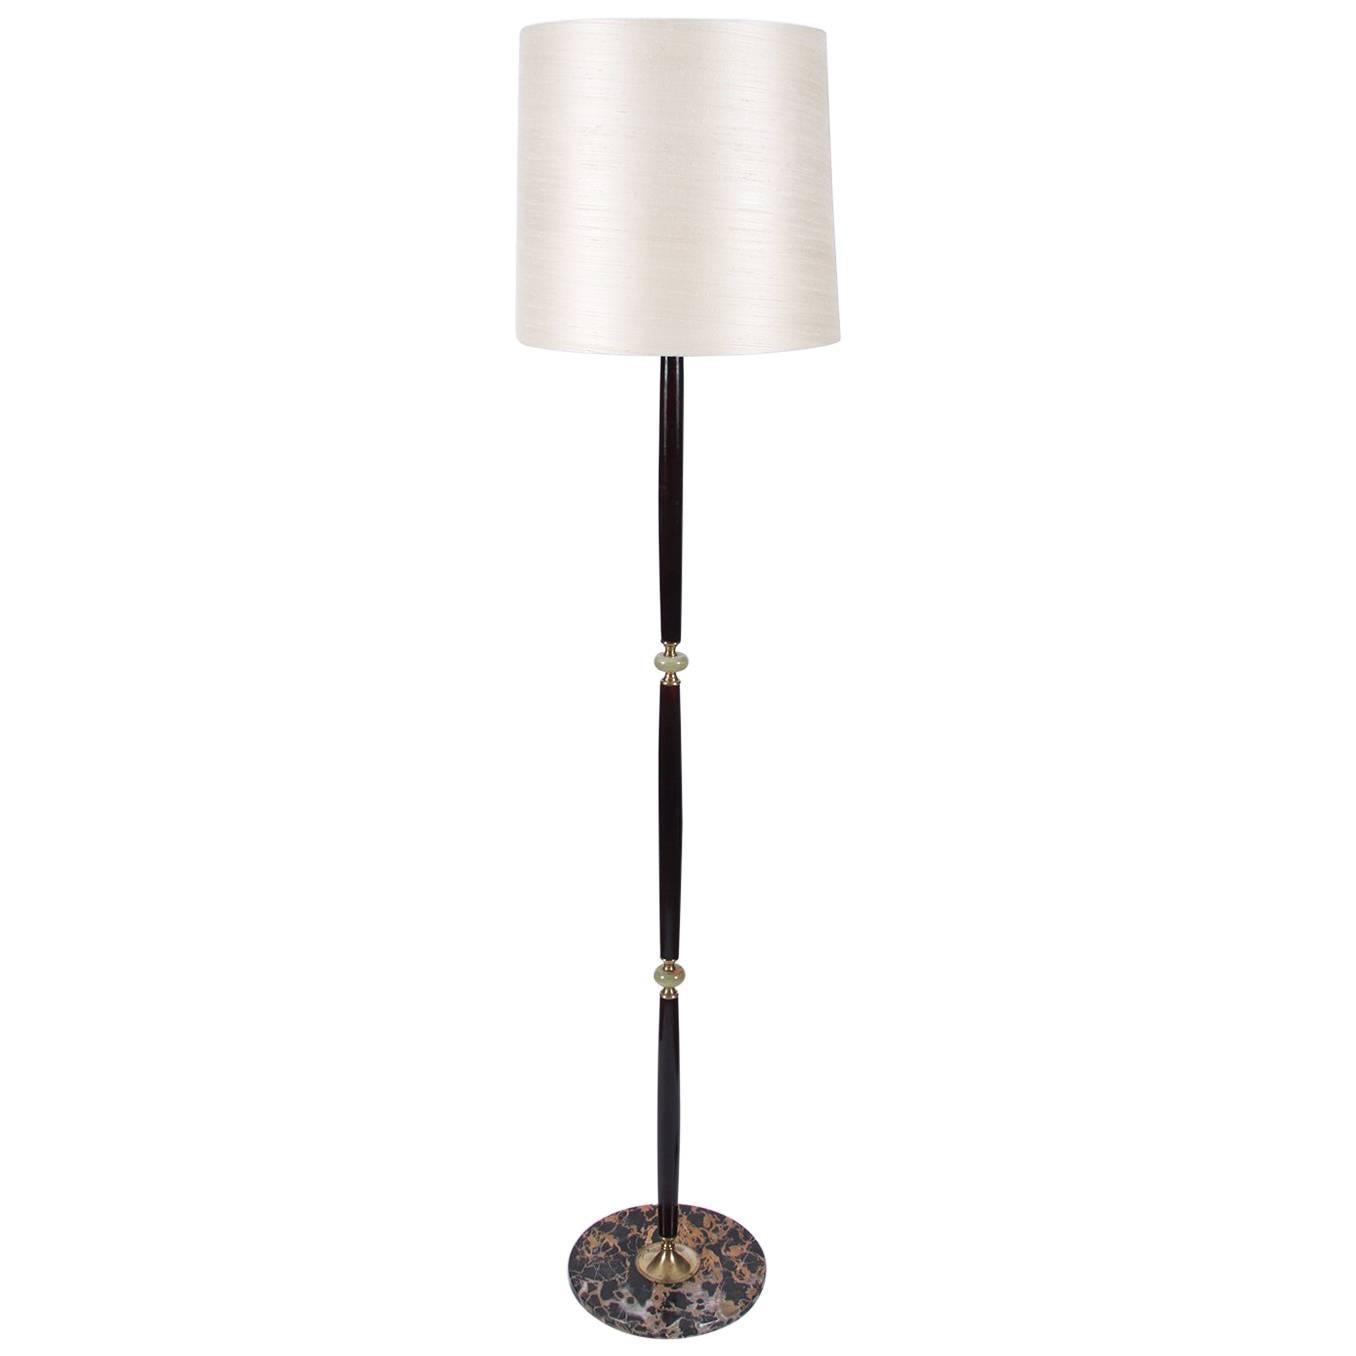 Italian Midcentury Lacquered Wood Floor Lamp